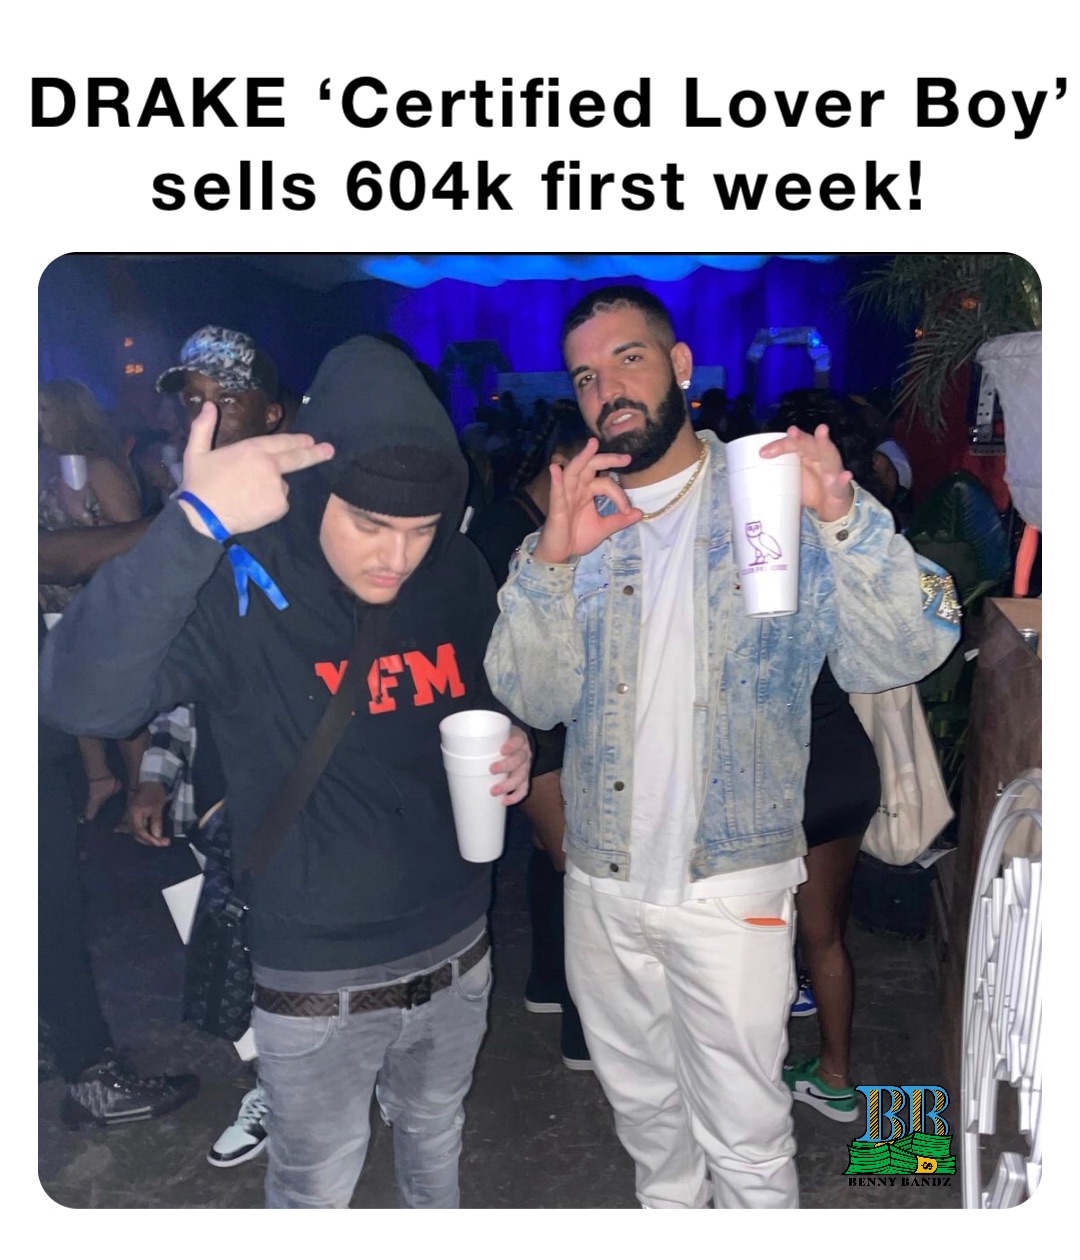 DRAKE ‘Certified Lover Boy’ sells 604k first week!